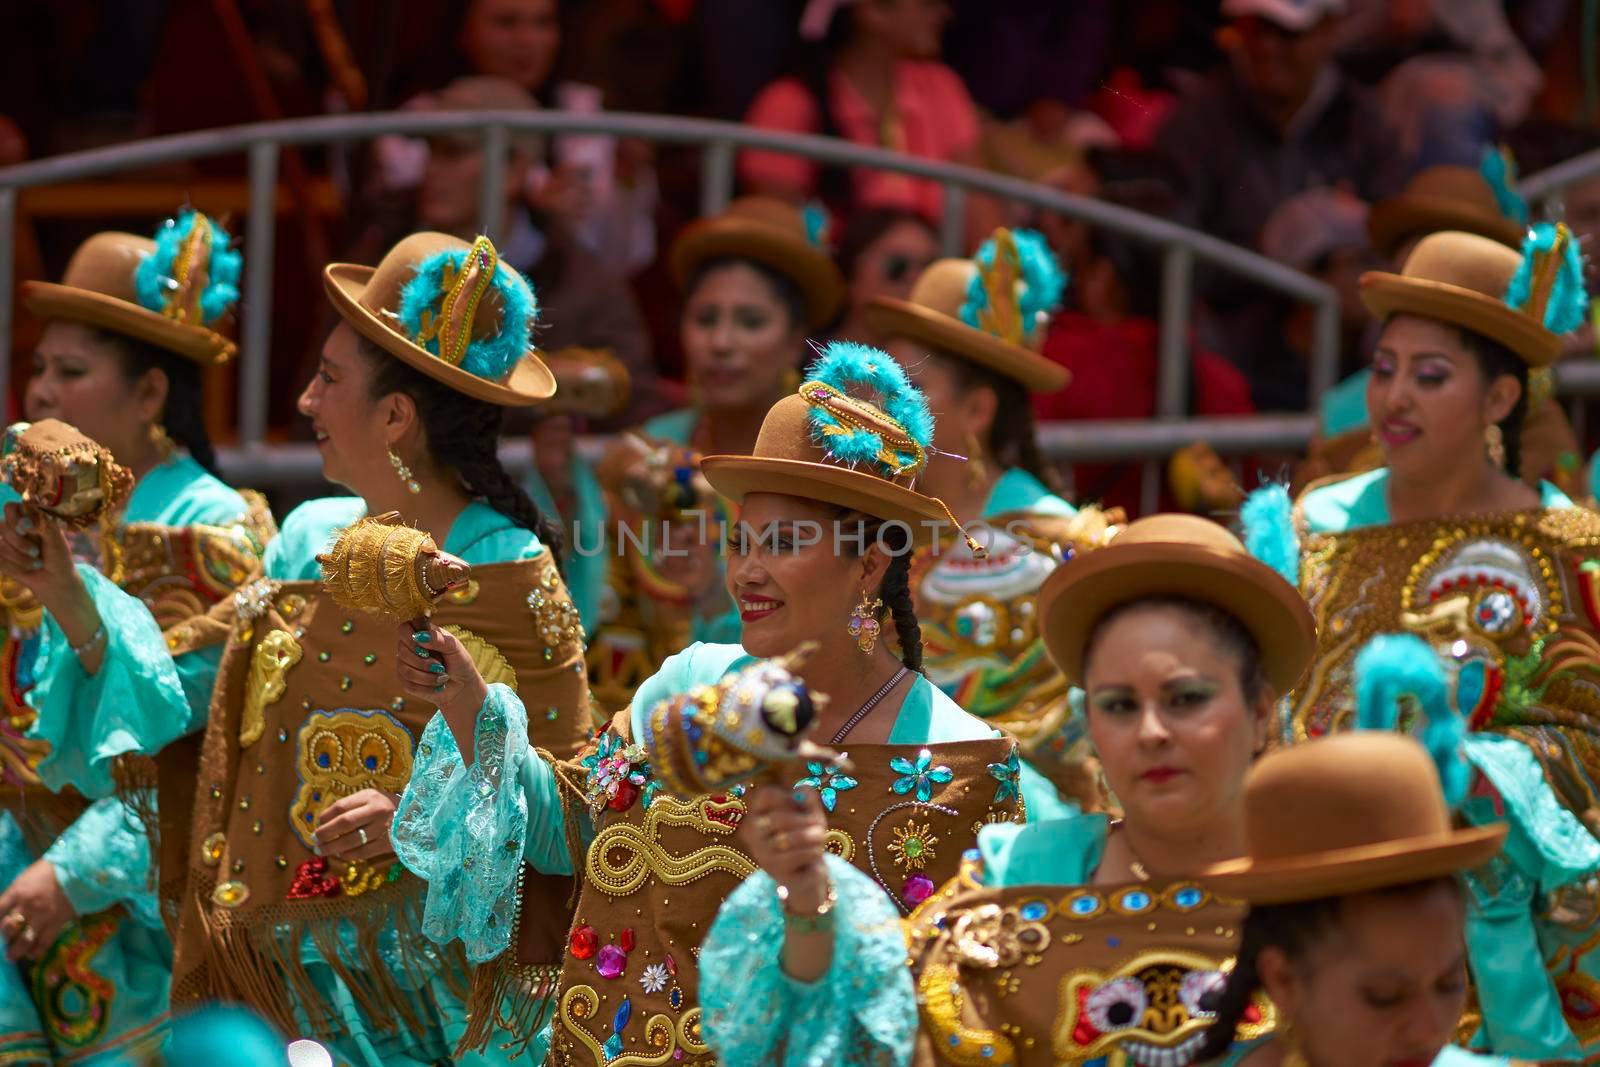 Dancers at the Oruro Carnival by JeremyRichards